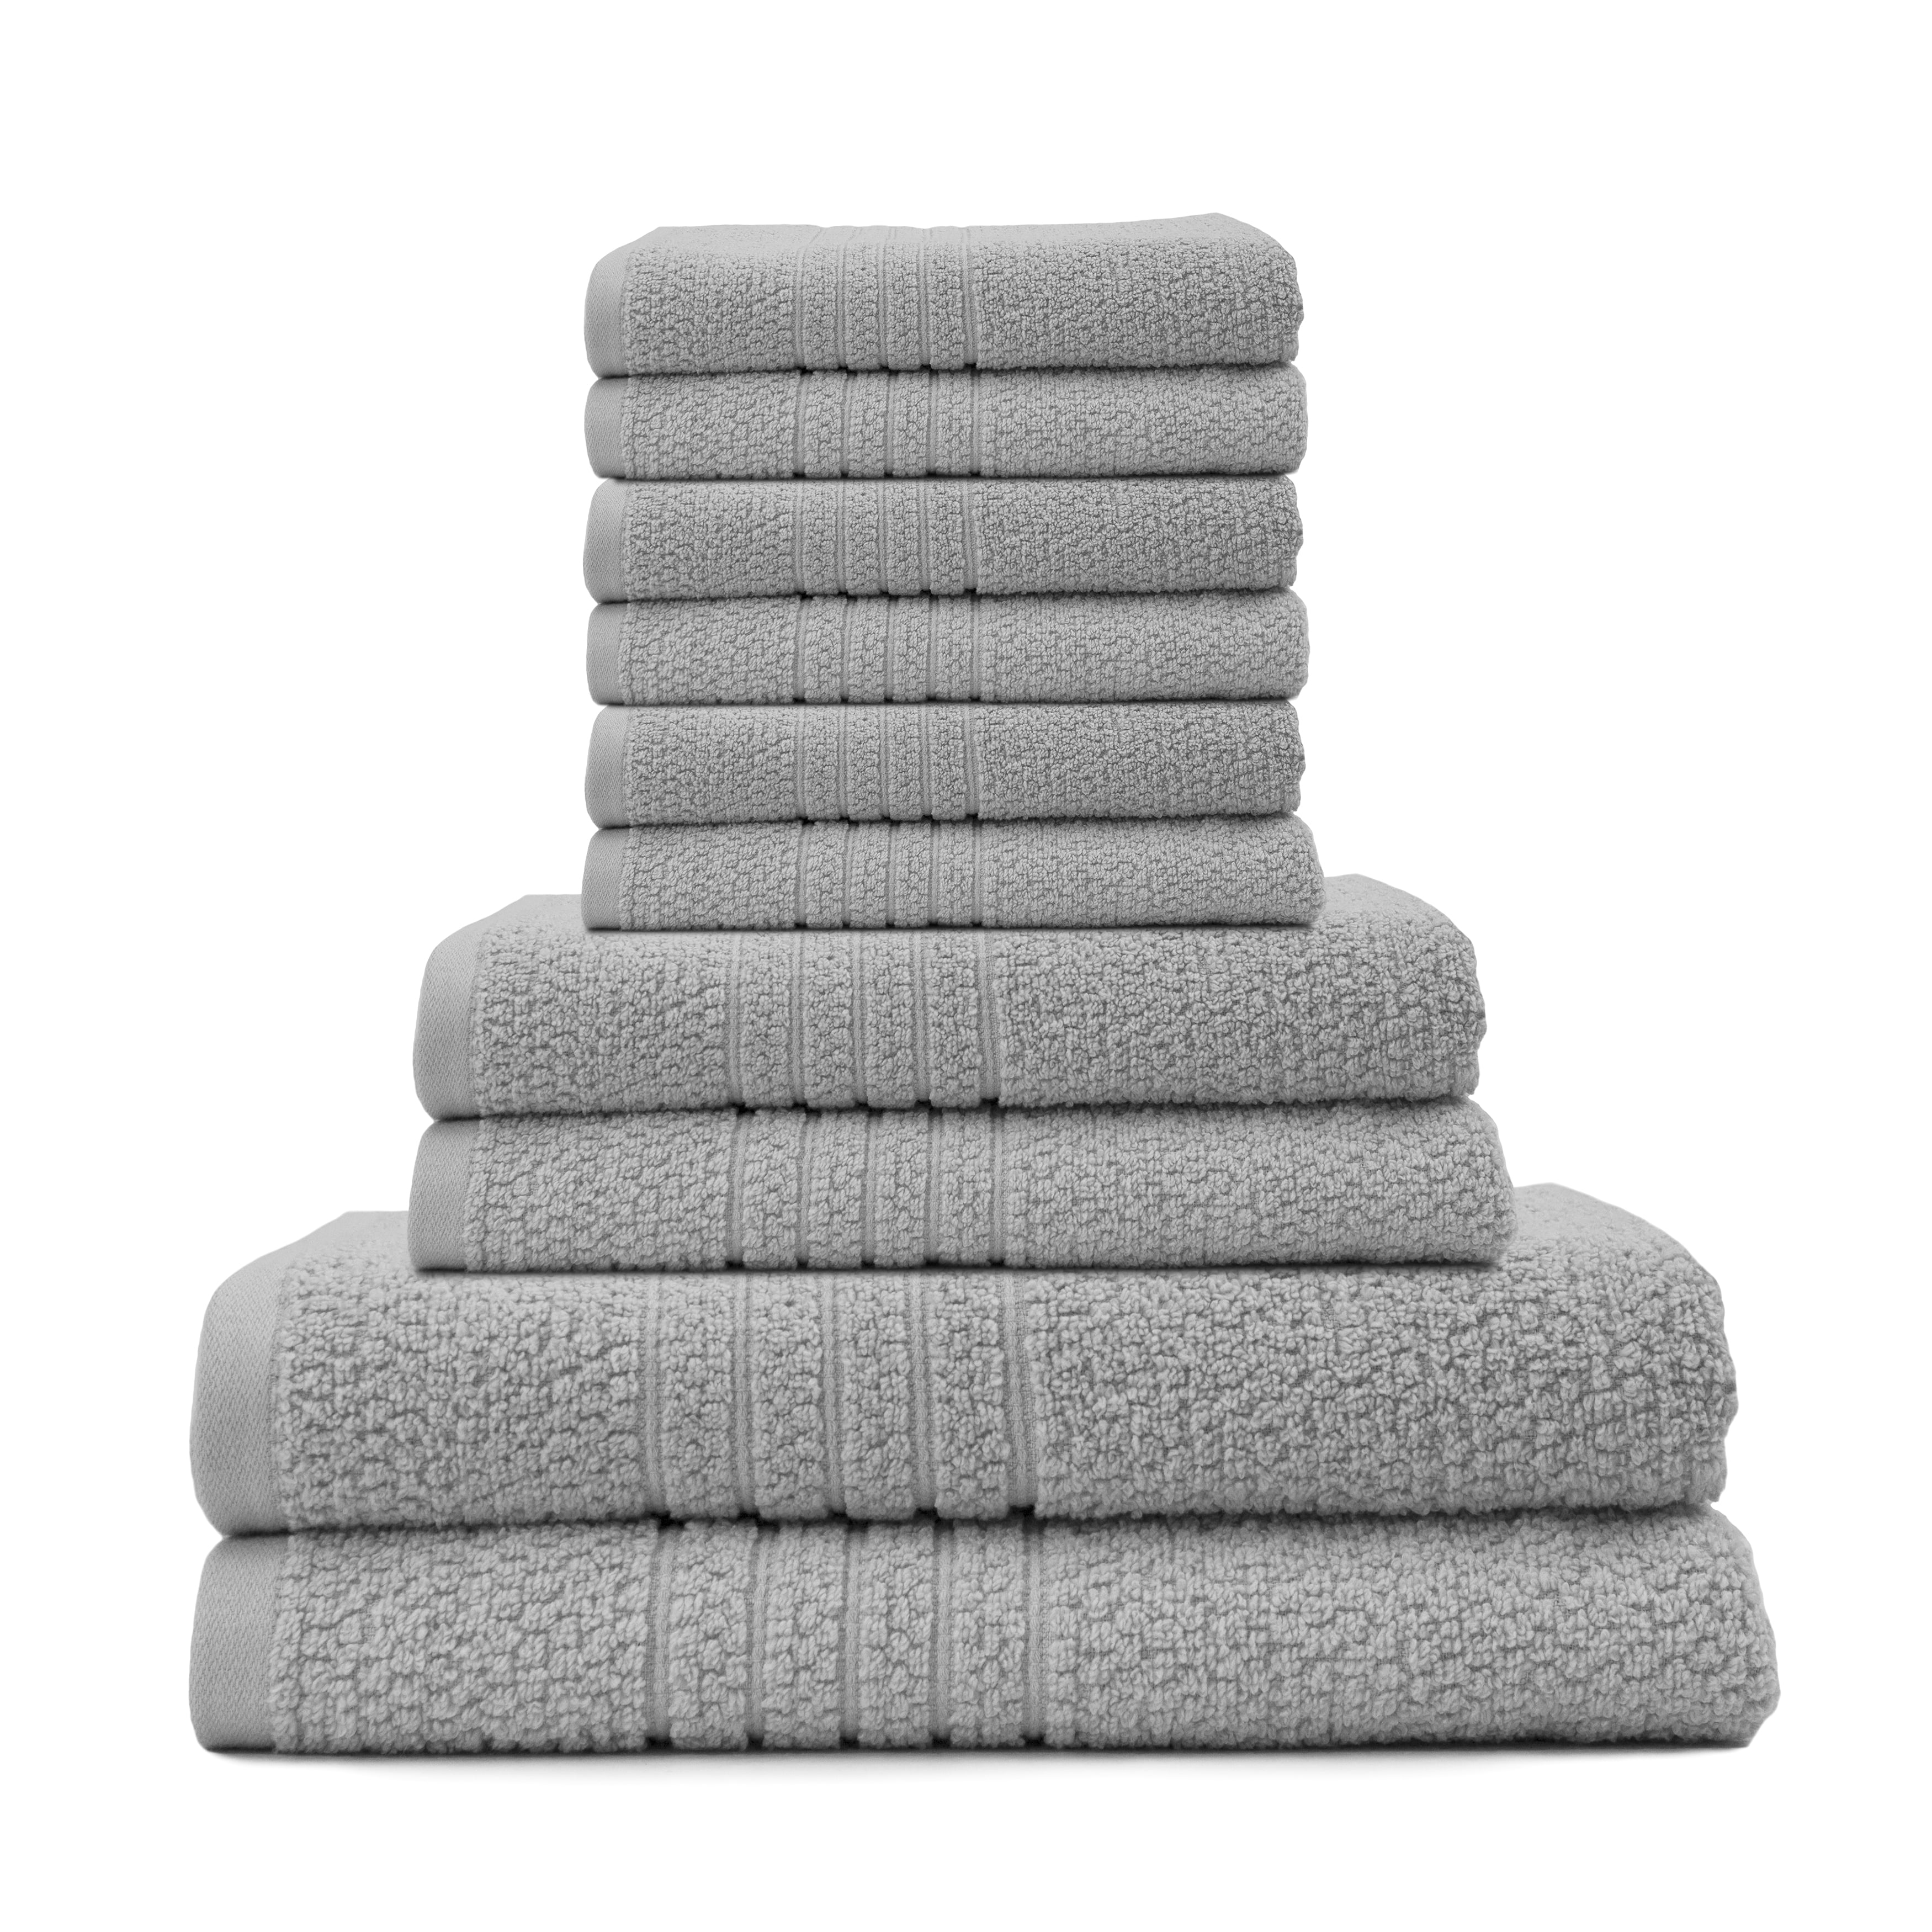 6 Piece Solid Print Cotton Towel Set, Gray